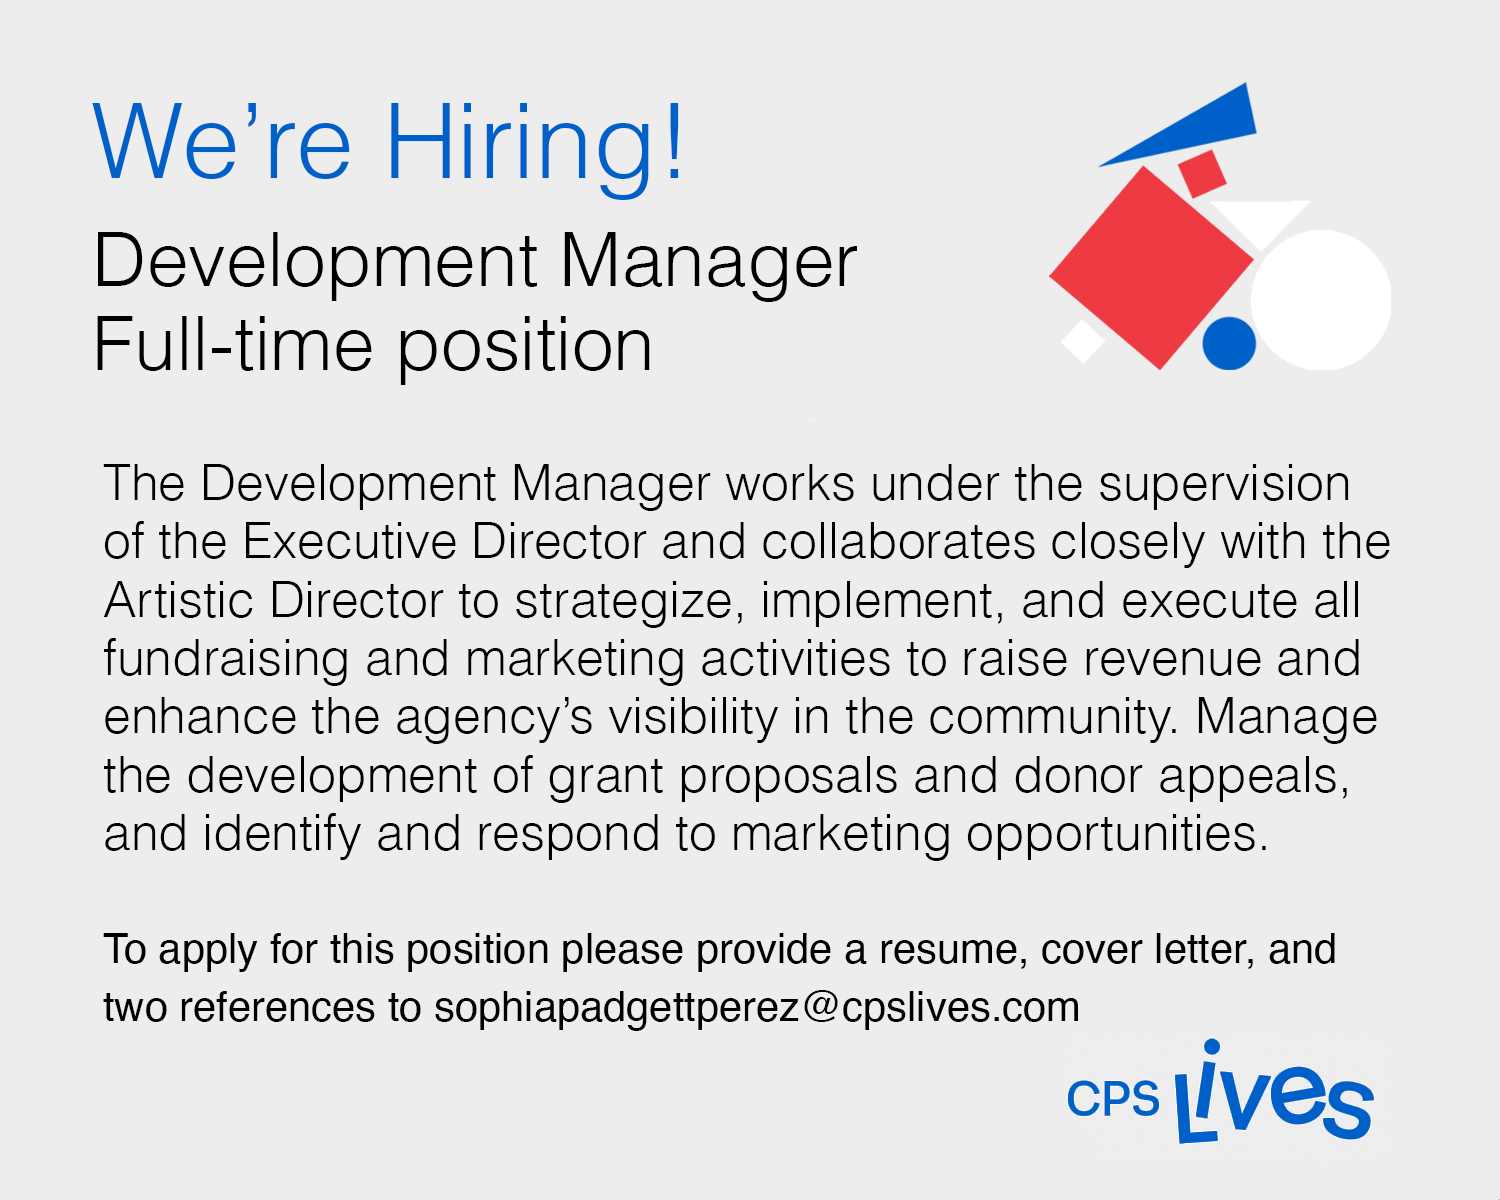 CPS Lives, we're hiring, job, chicago, nonprofit organization, development manager, art